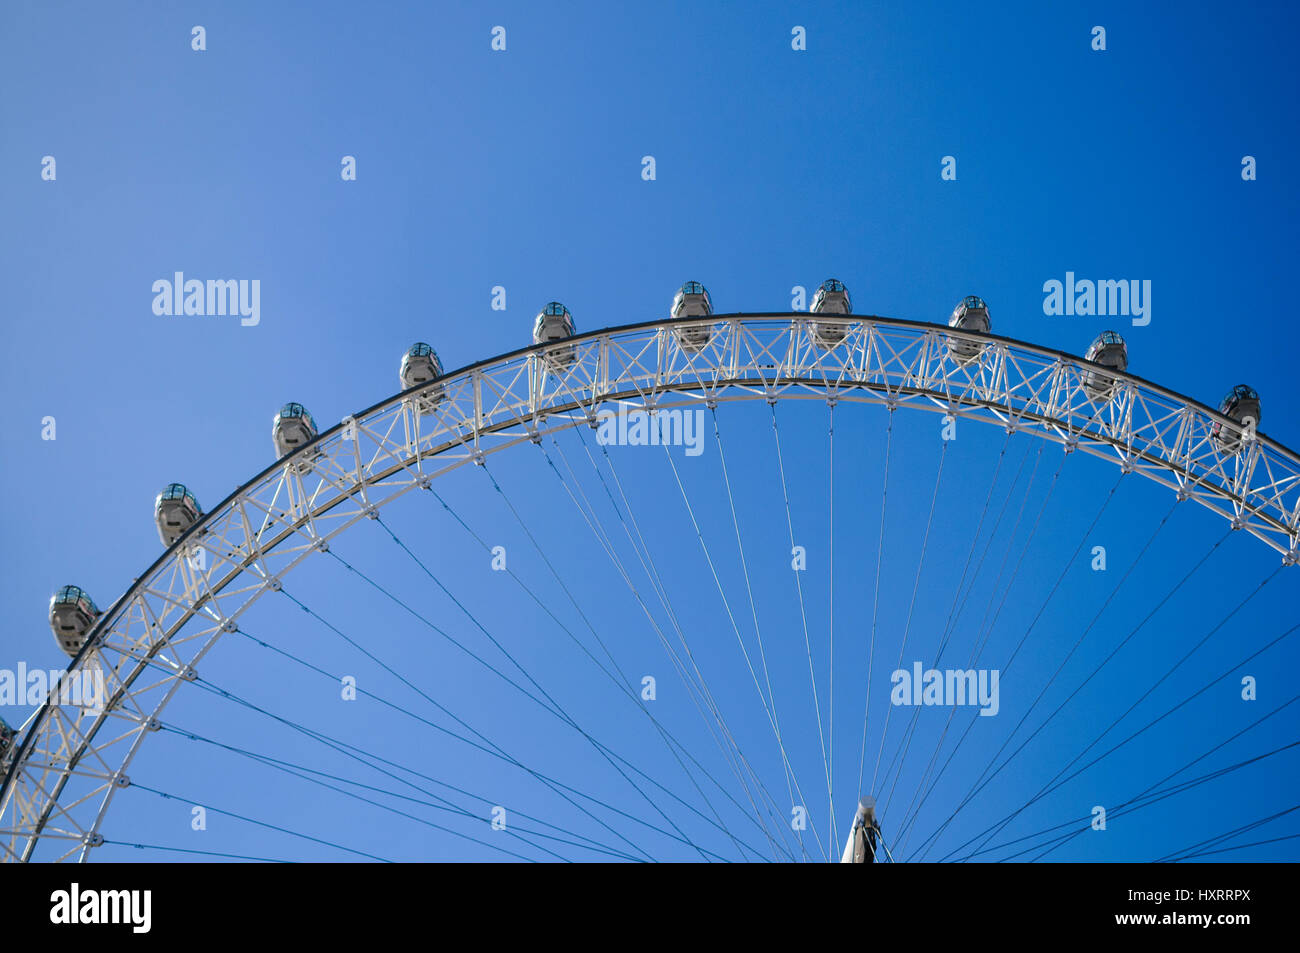 An abstract view of The Millennium Wheel aka the London Eye. London, England 2017. Stock Photo